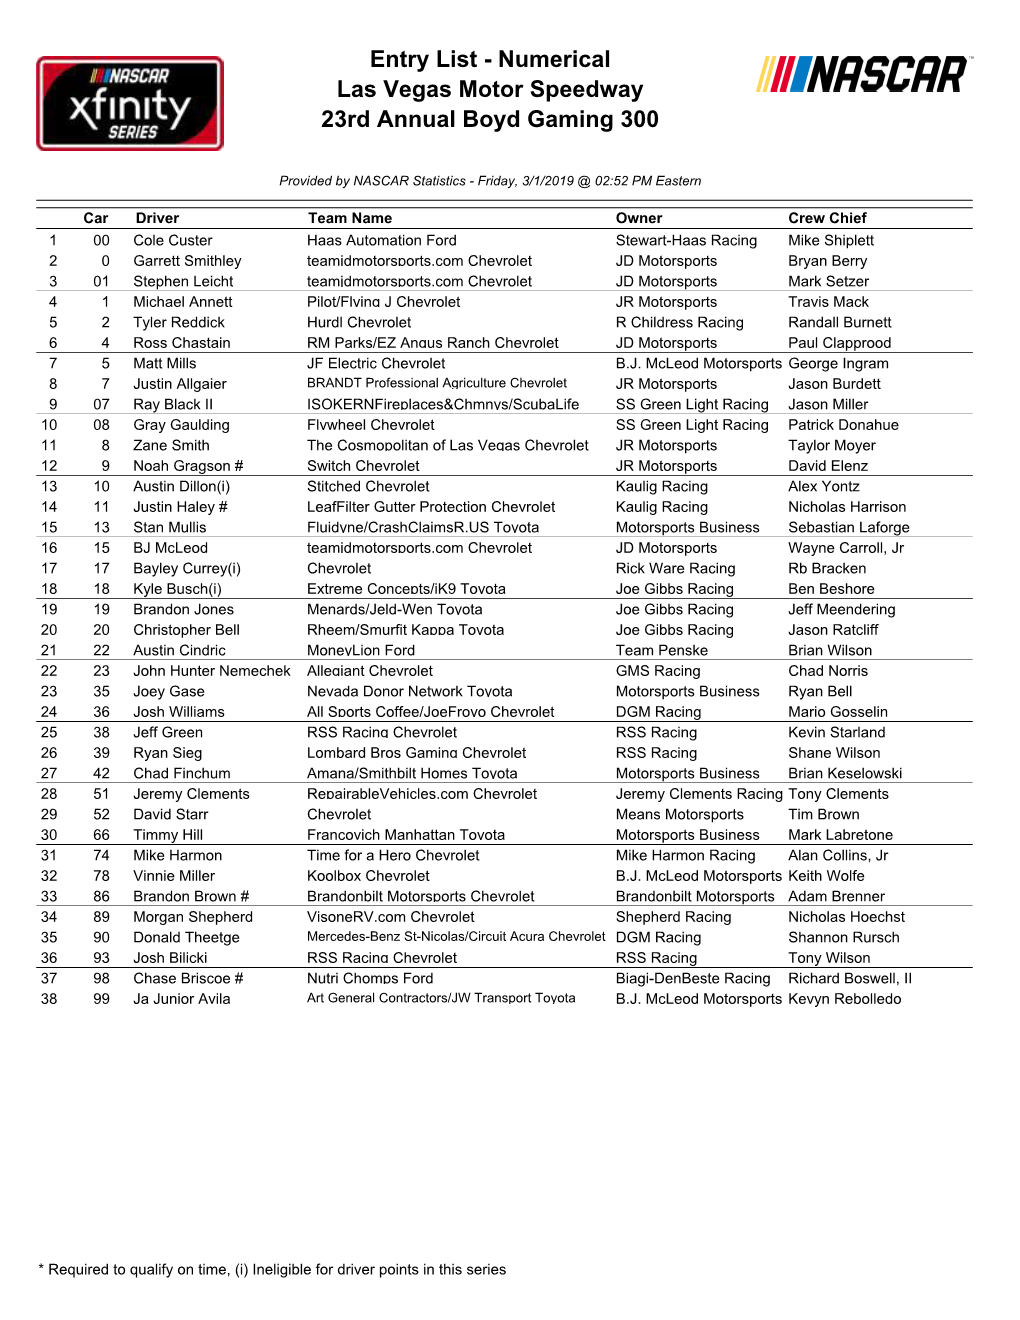 Entry List - Numerical Las Vegas Motor Speedway 23Rd Annual Boyd Gaming 300